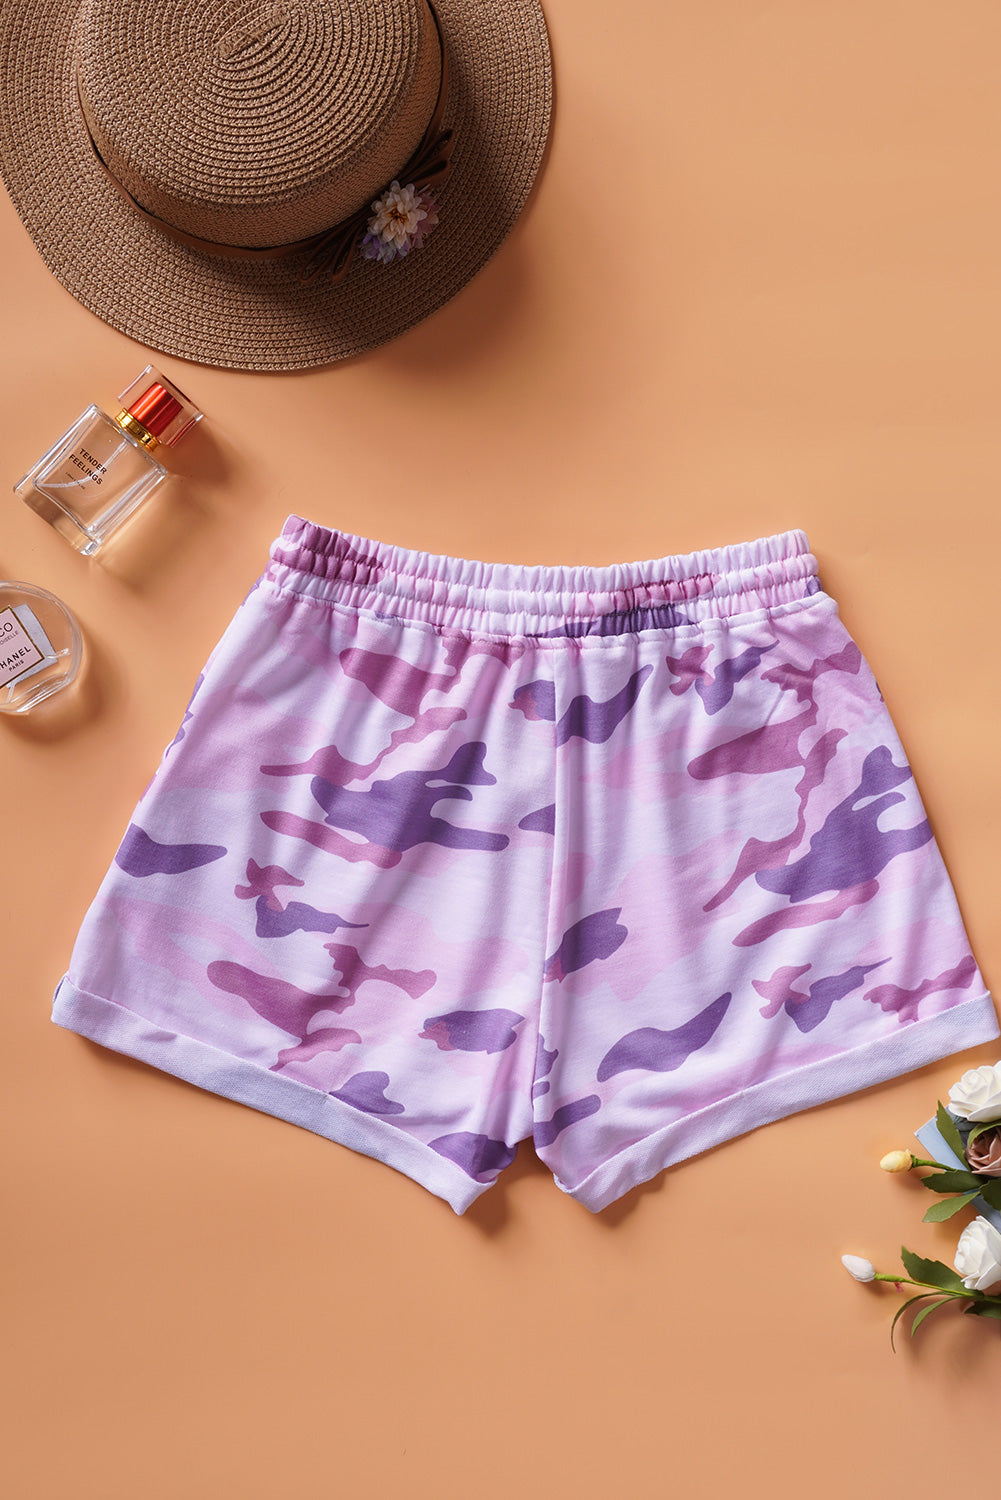 Women's Summer Pink Camo Print Cotton Casual Shorts